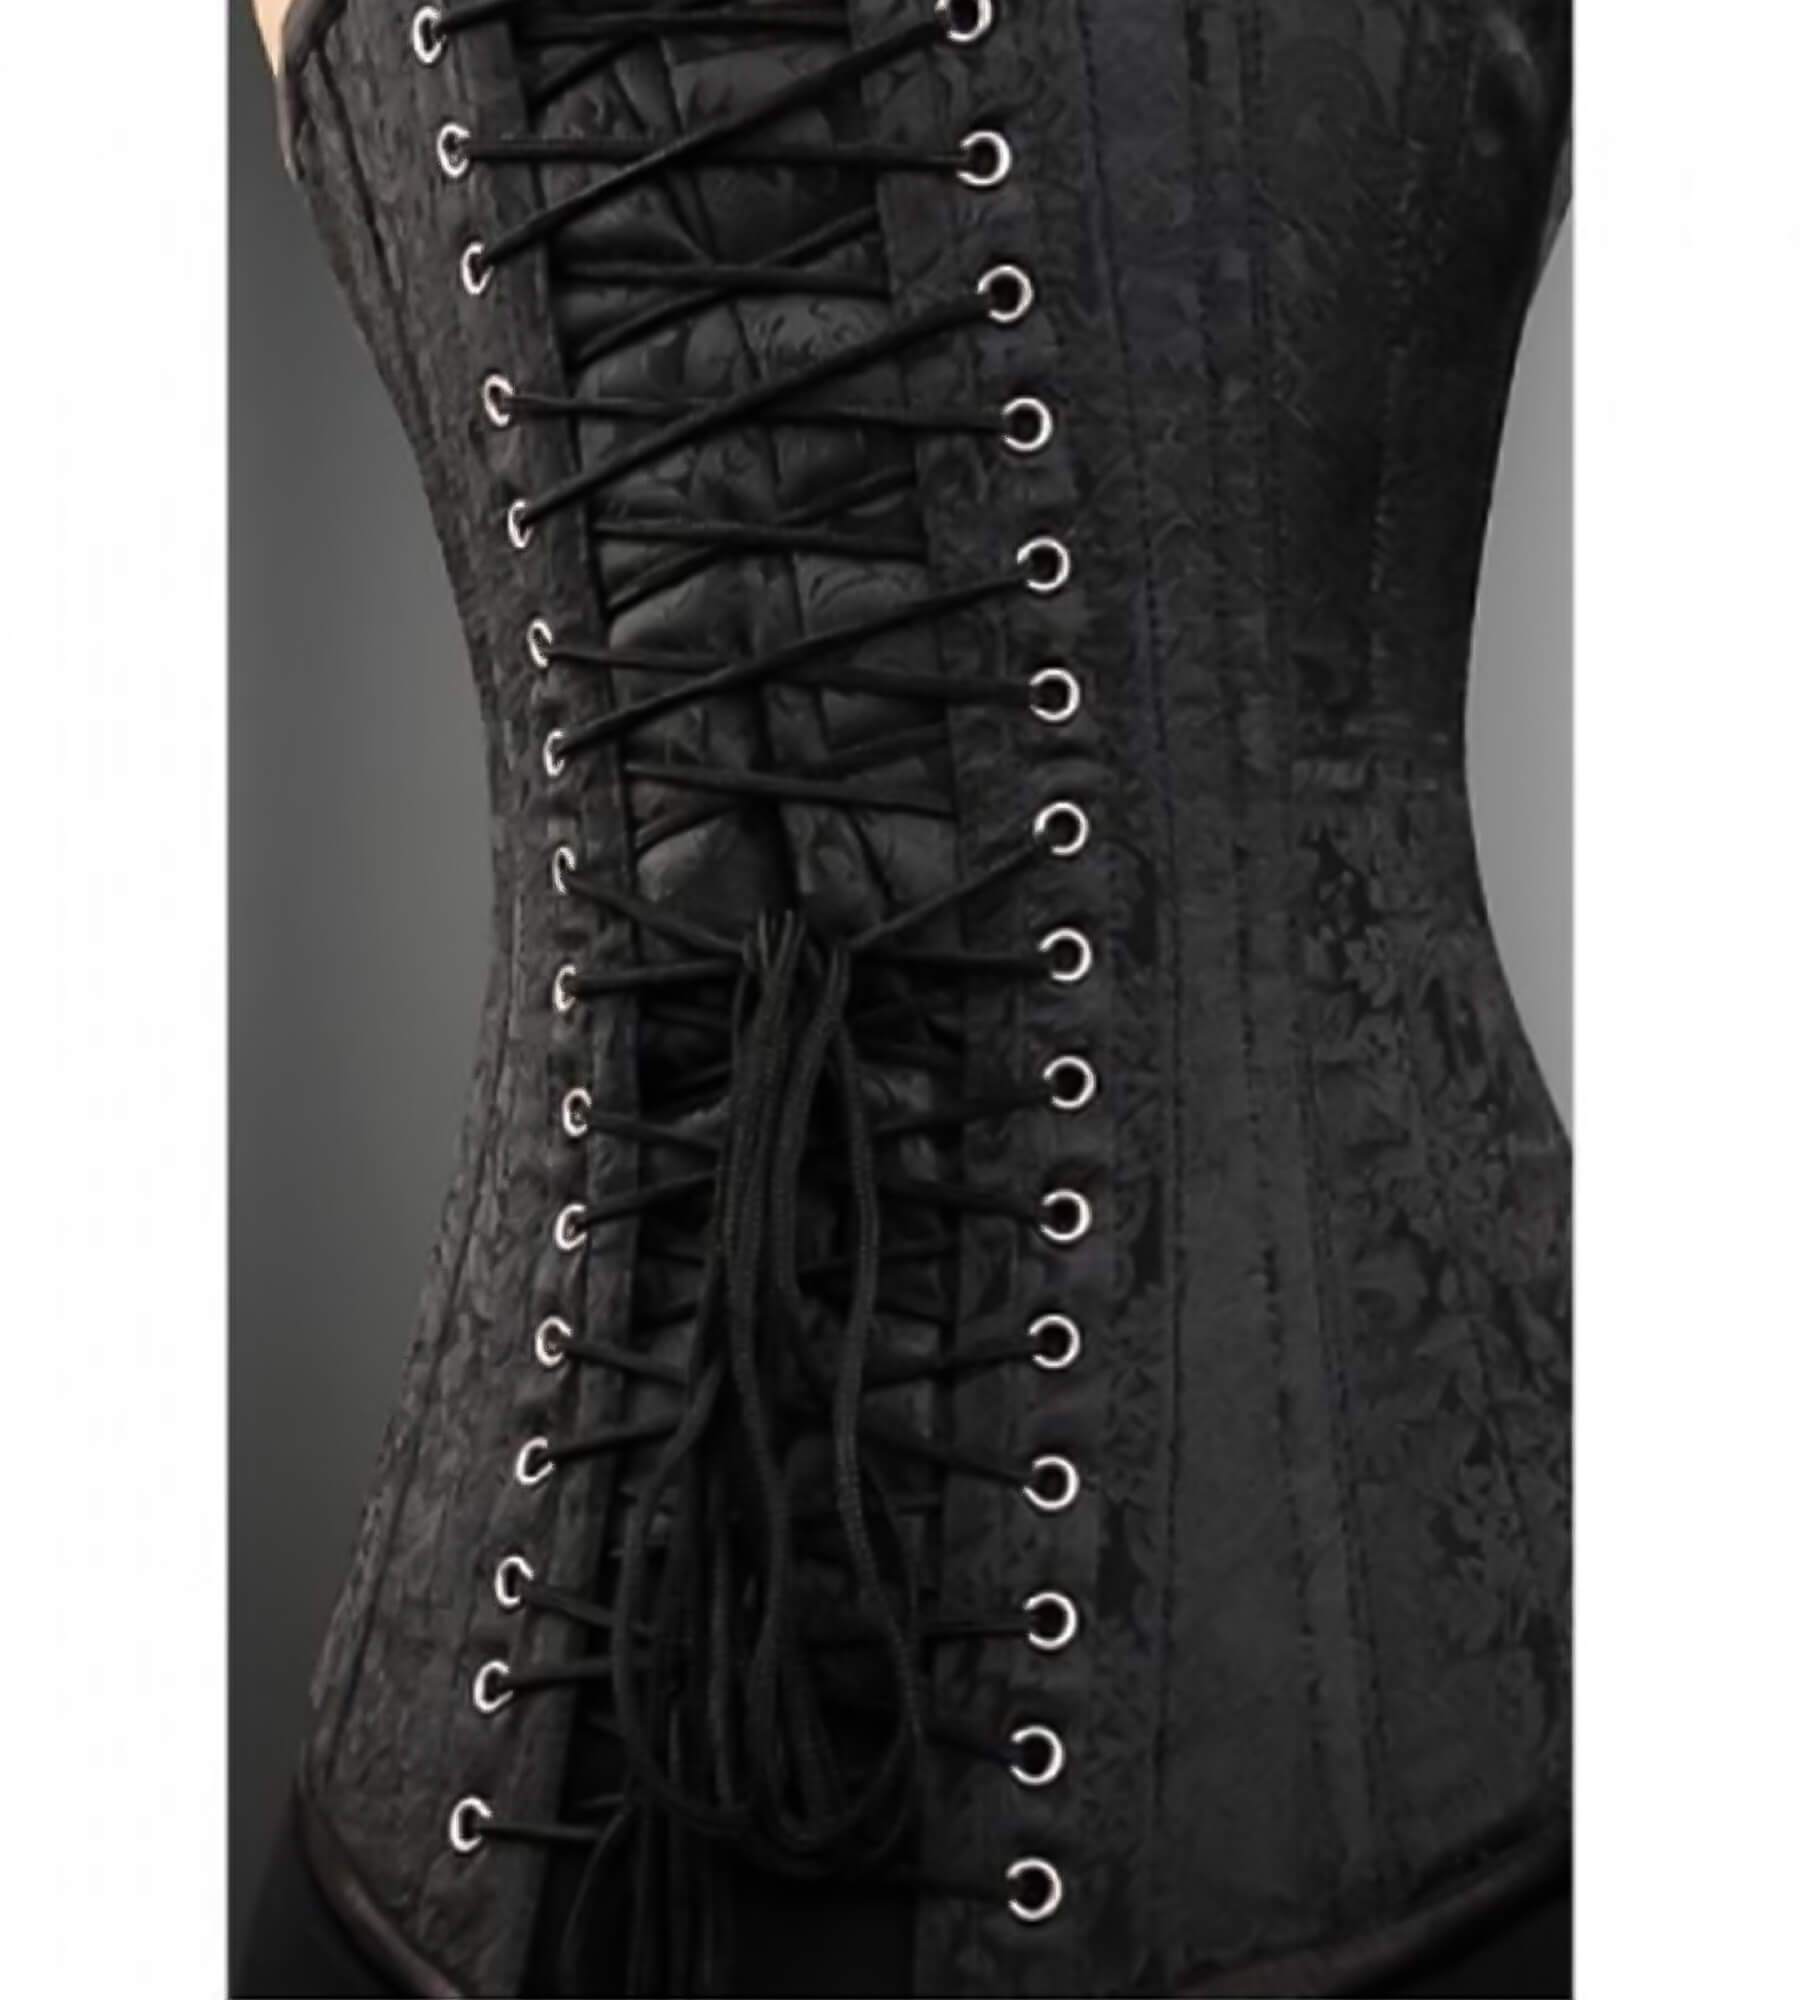 Black Brocade Gothic Burlesque LONGLINE Corset Waist Training Zipper  Opening Top